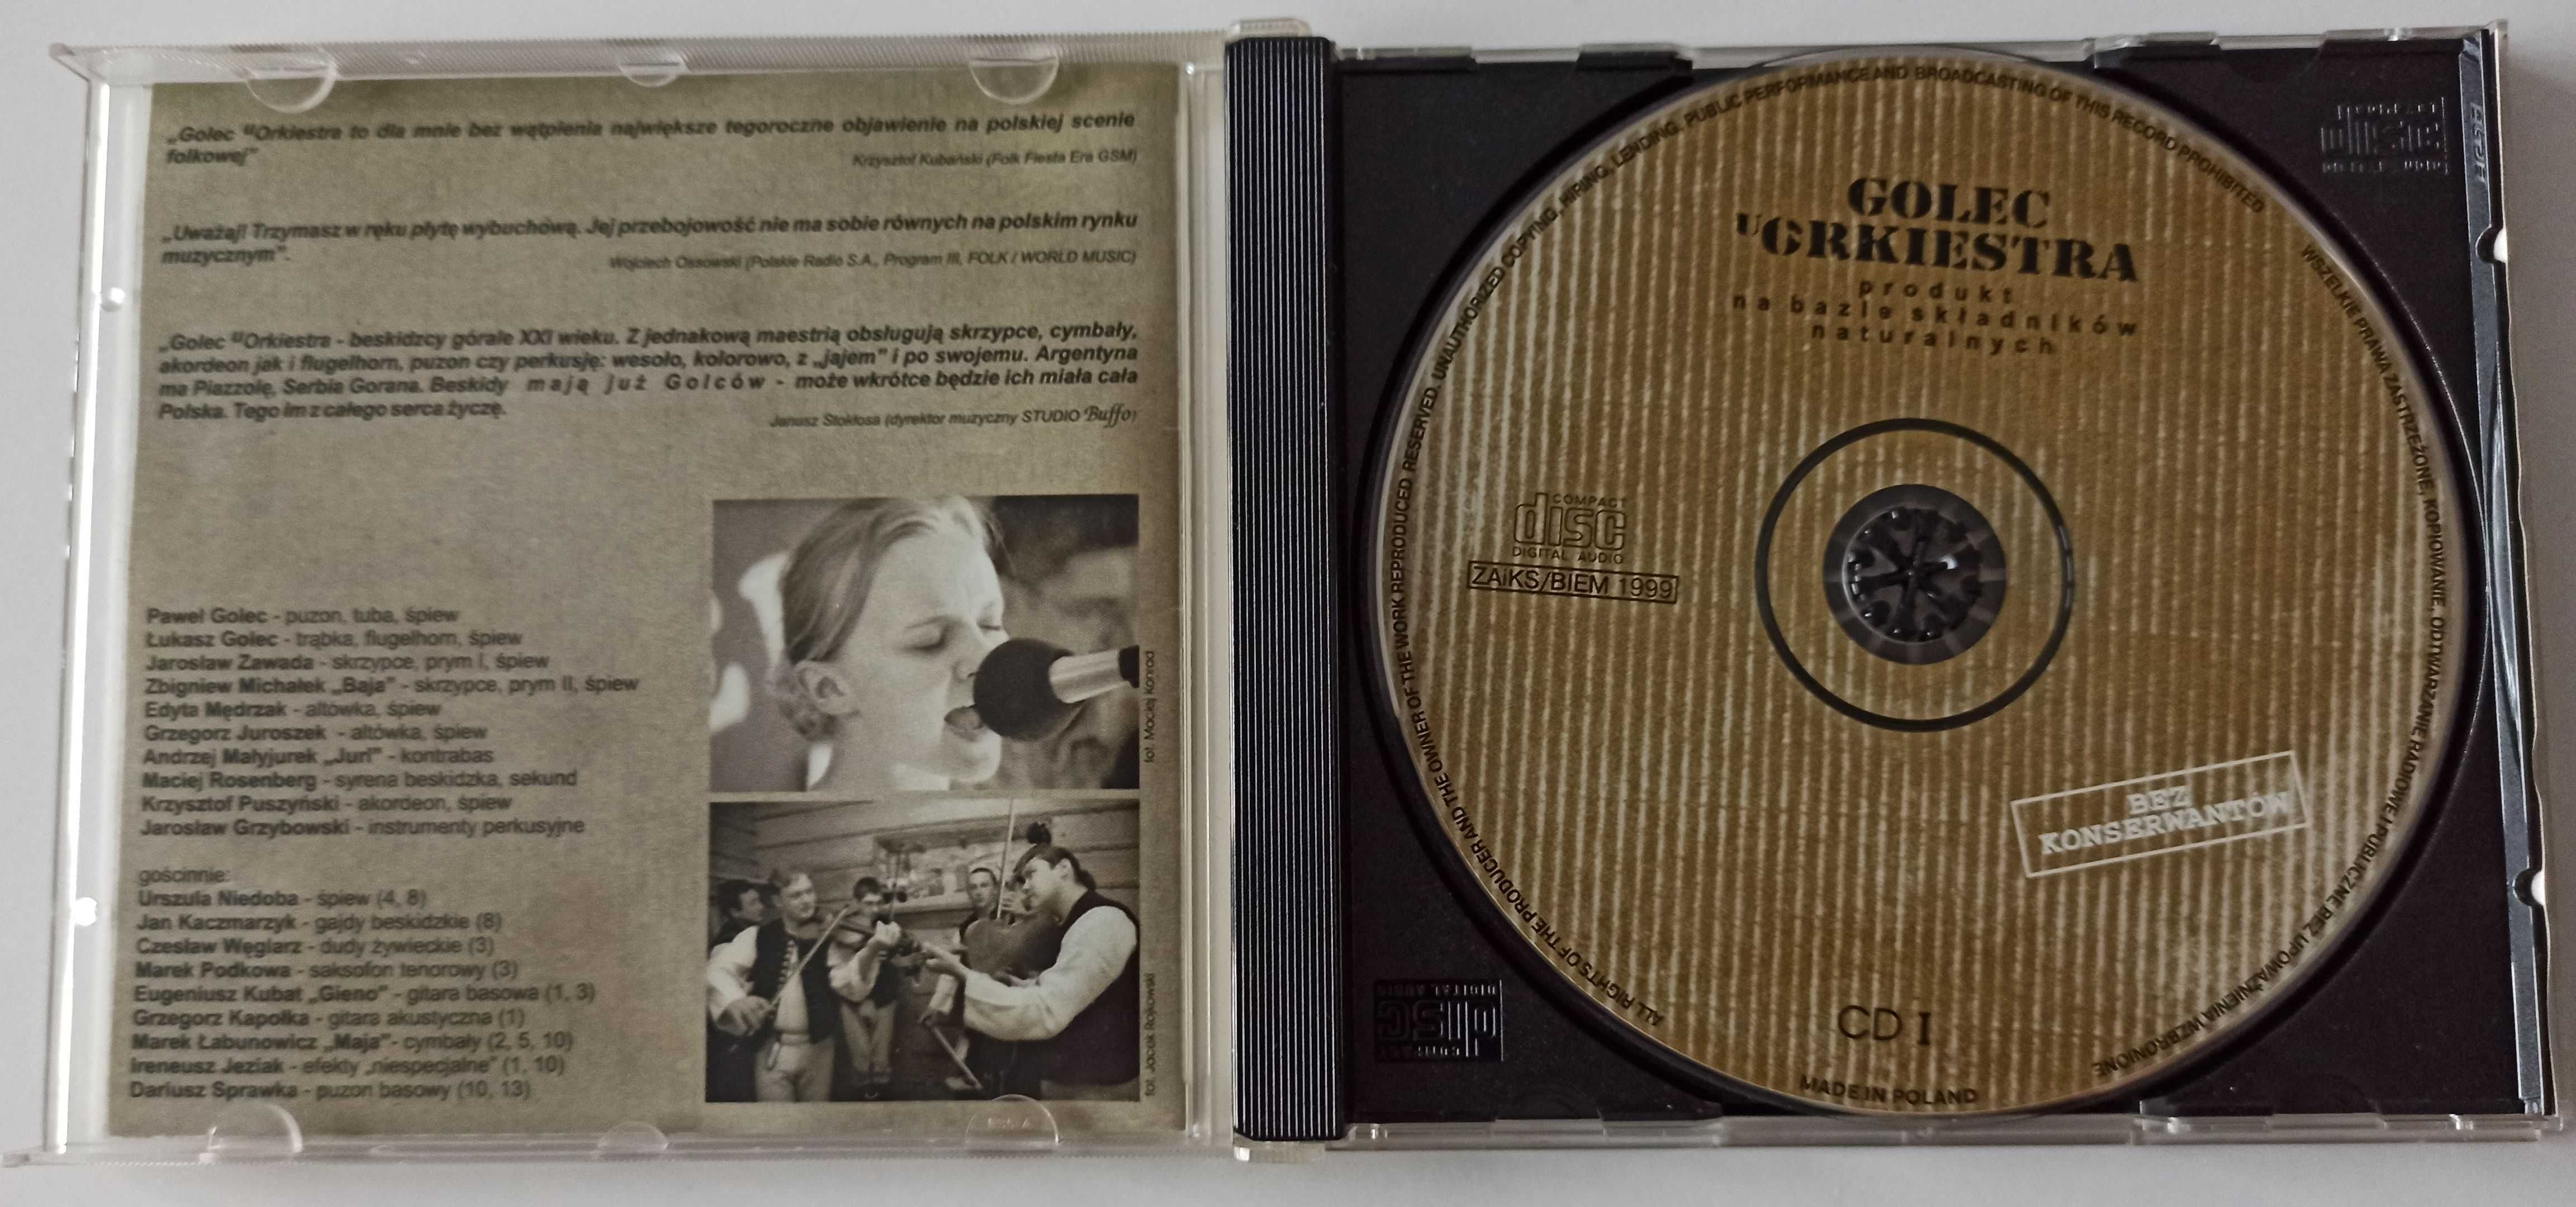 Golec uOrchestra - 1 - debiutancka płyta CD muzyka góralska